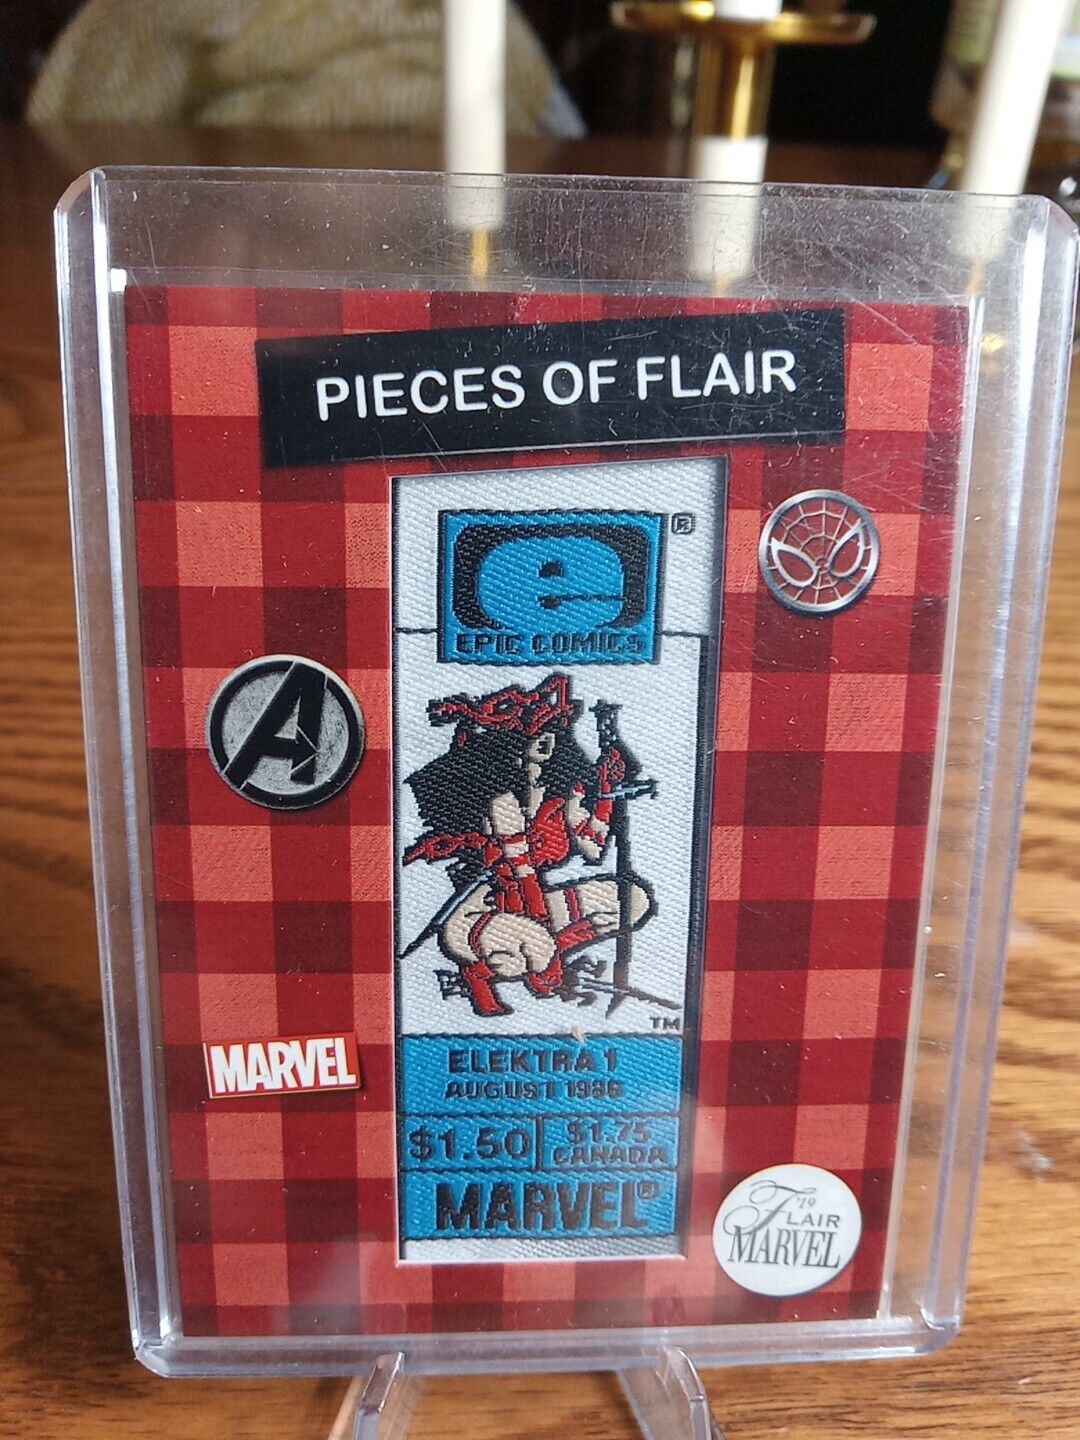 2019 Flair Marvel Pieces of Flair Elektra Assassin #1 POF6 Patch Card